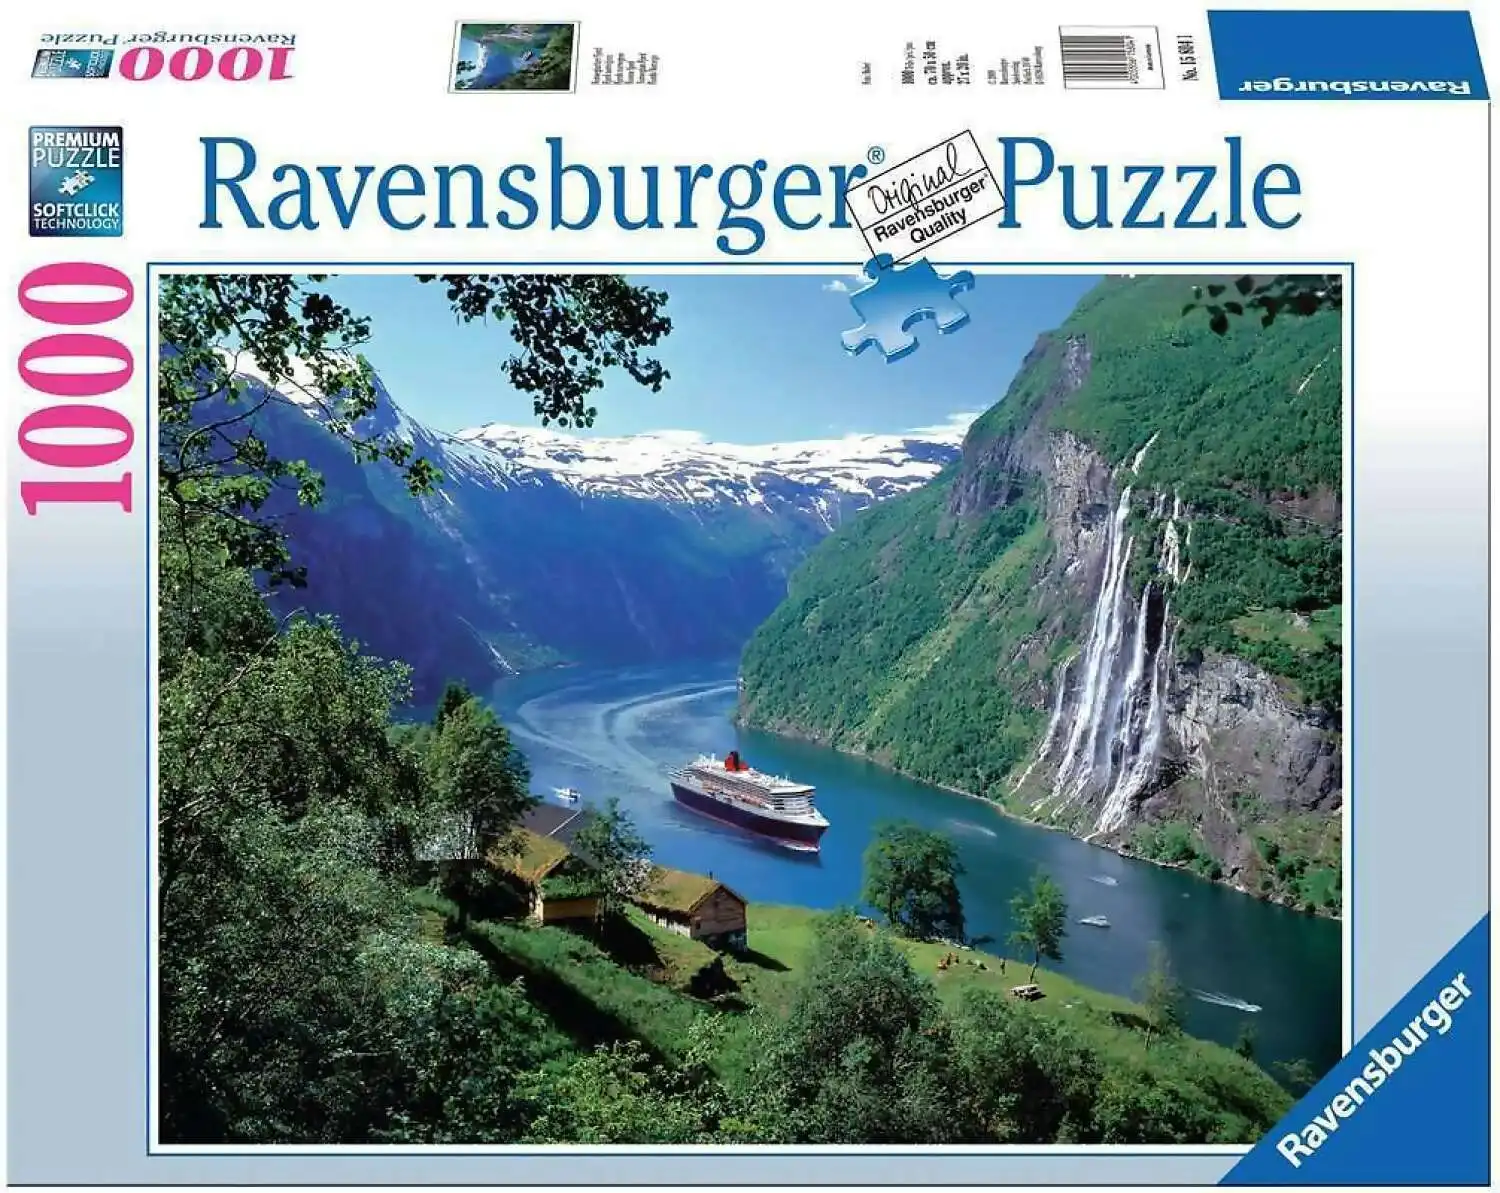 Ravensburger - Norwegian Fjord Jigsaw Puzzle 1000 Pieces